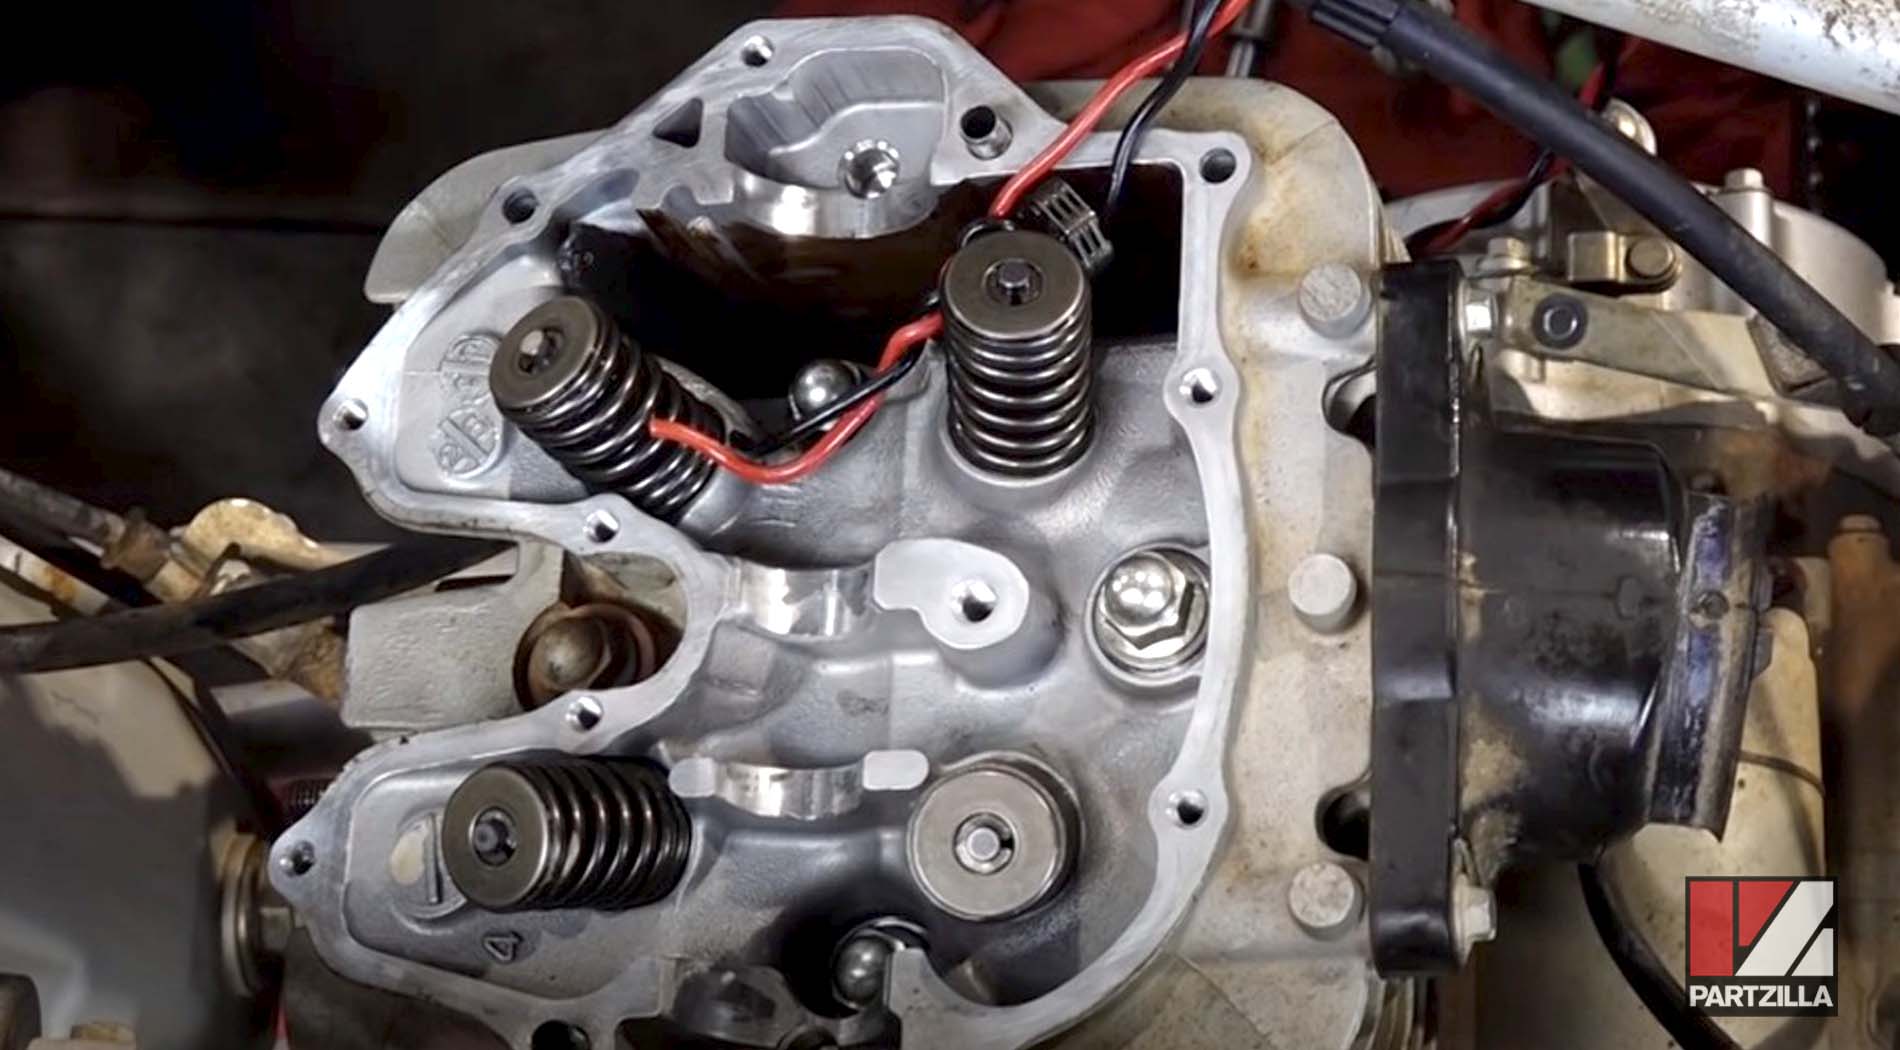 Honda TRX400 engine rebuild